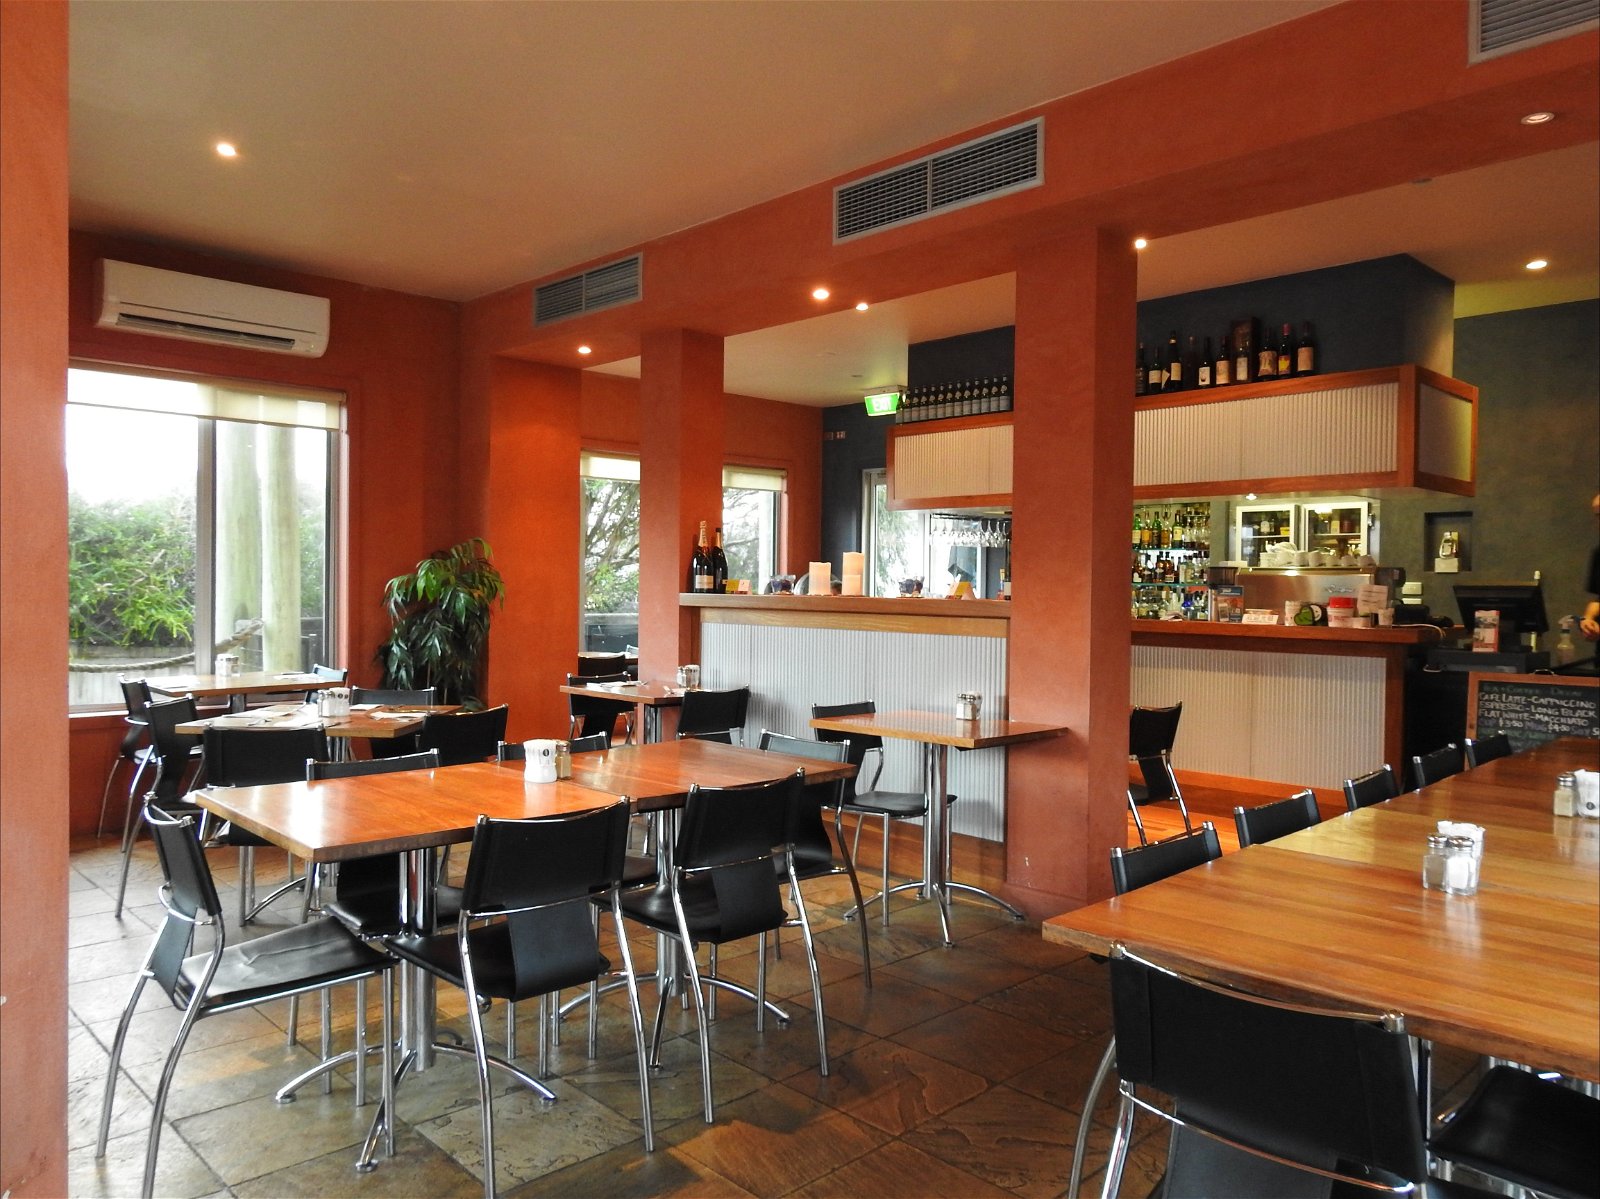 Waves Cafe Bar and Restaurant